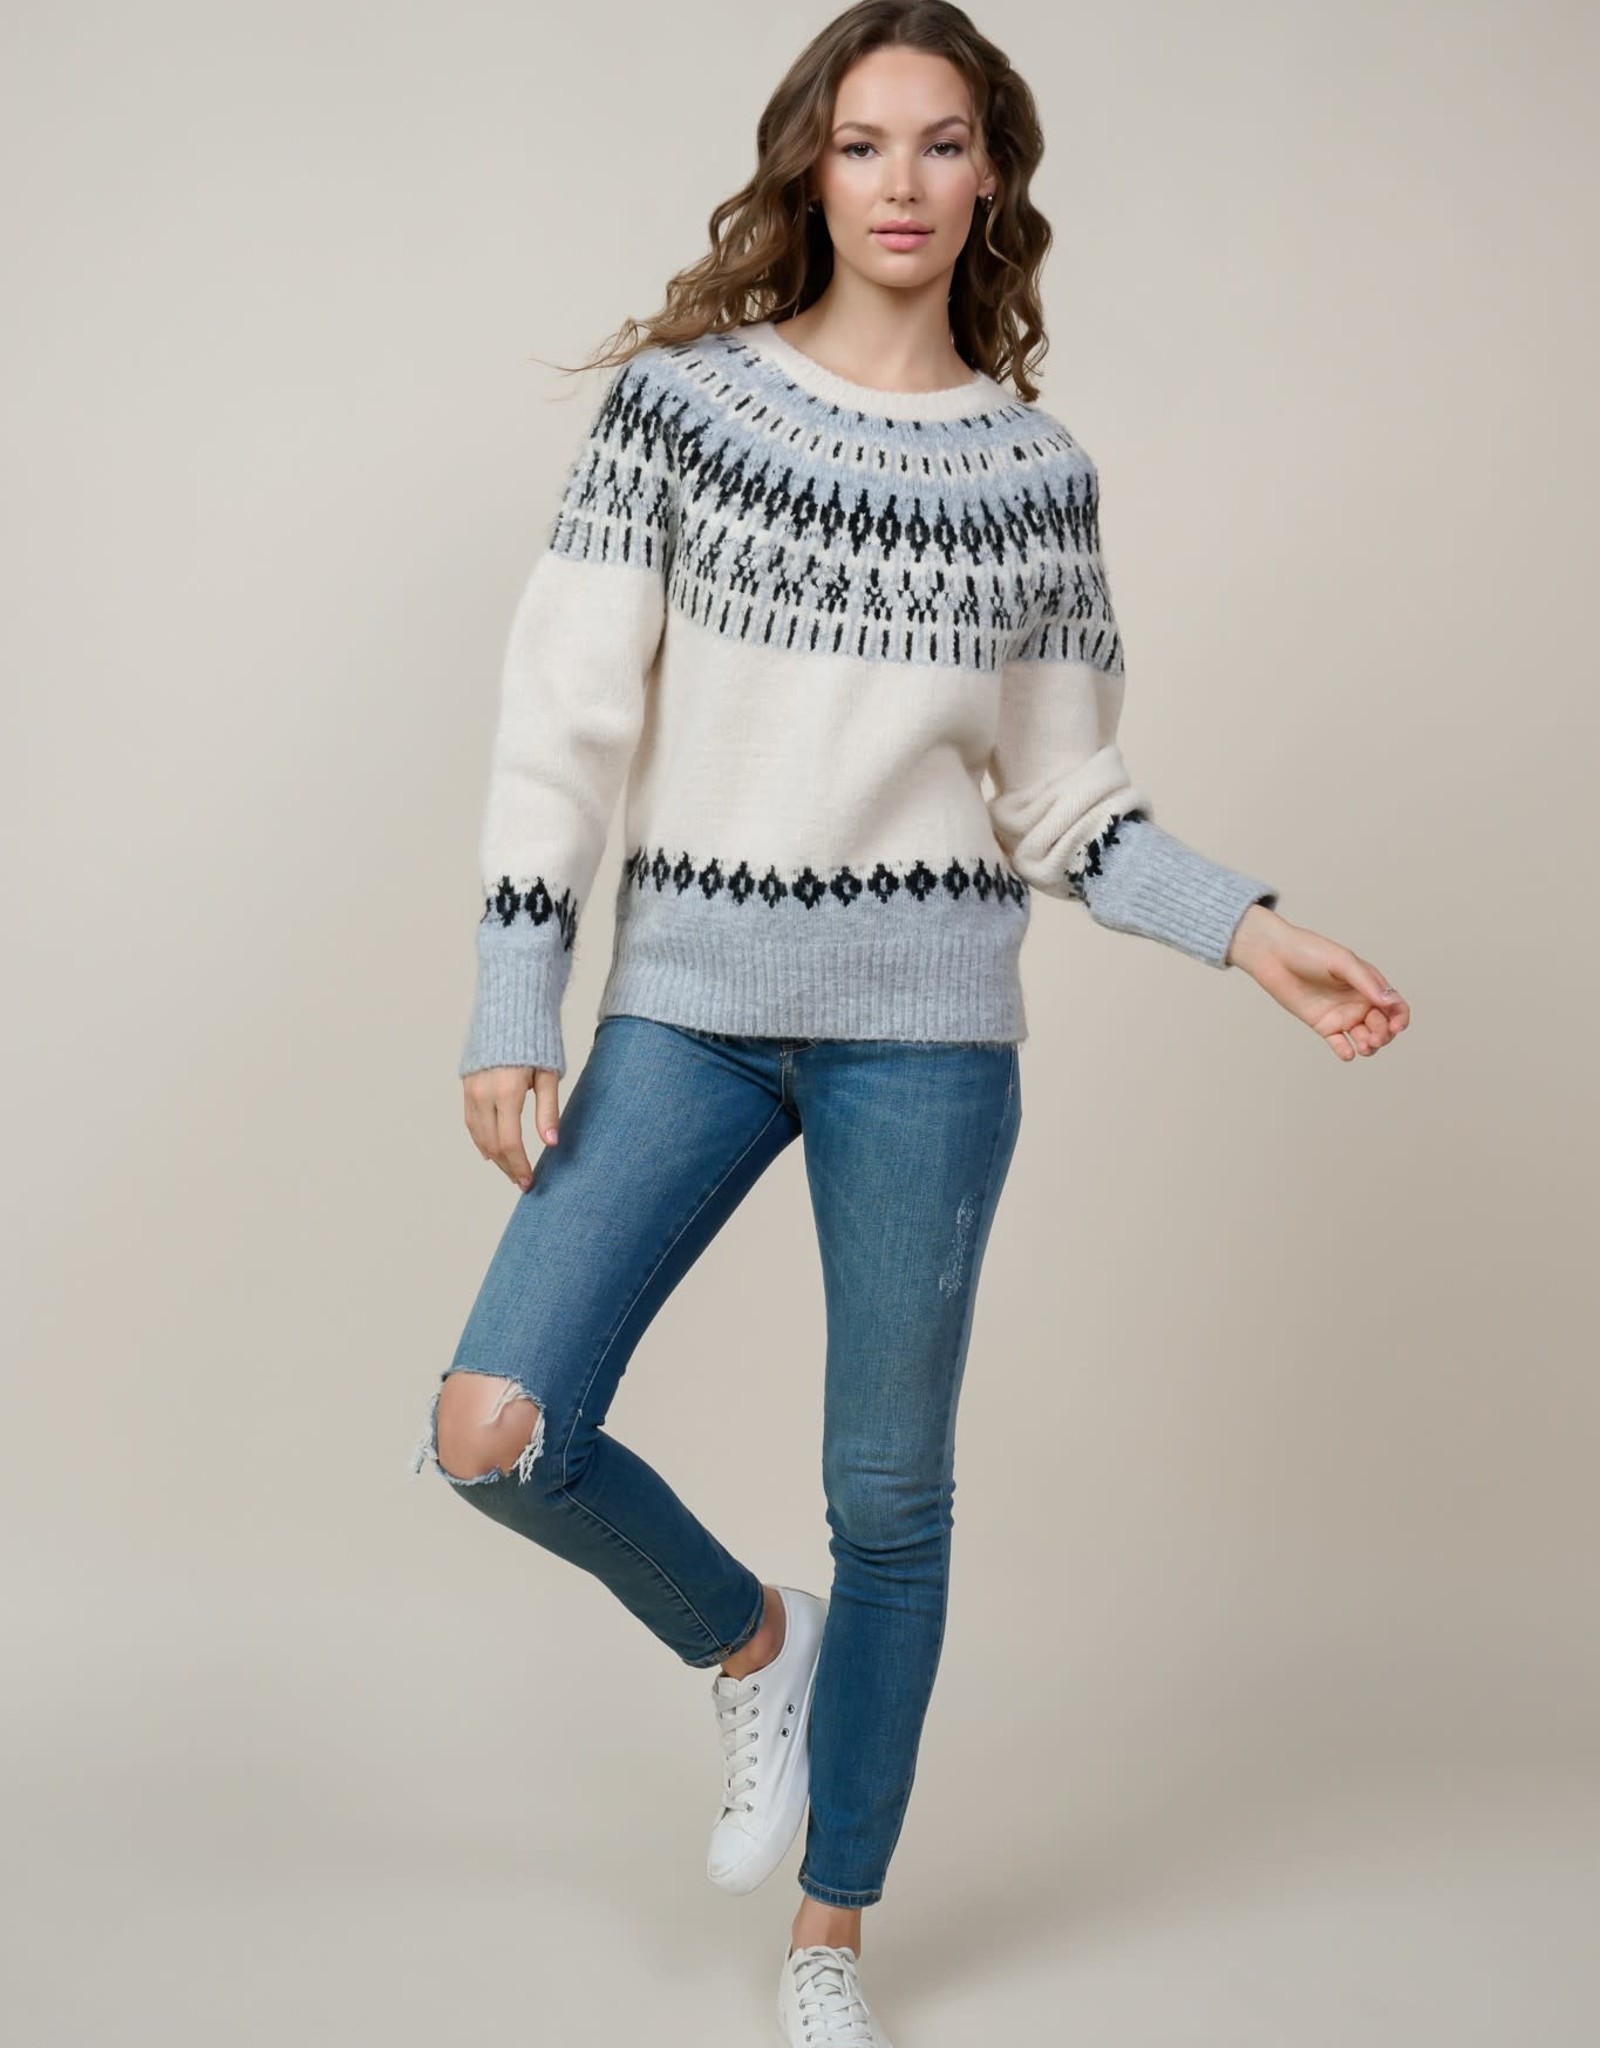 Miss Bliss Fairisle Printed Knit Sweater- Cream and Grey